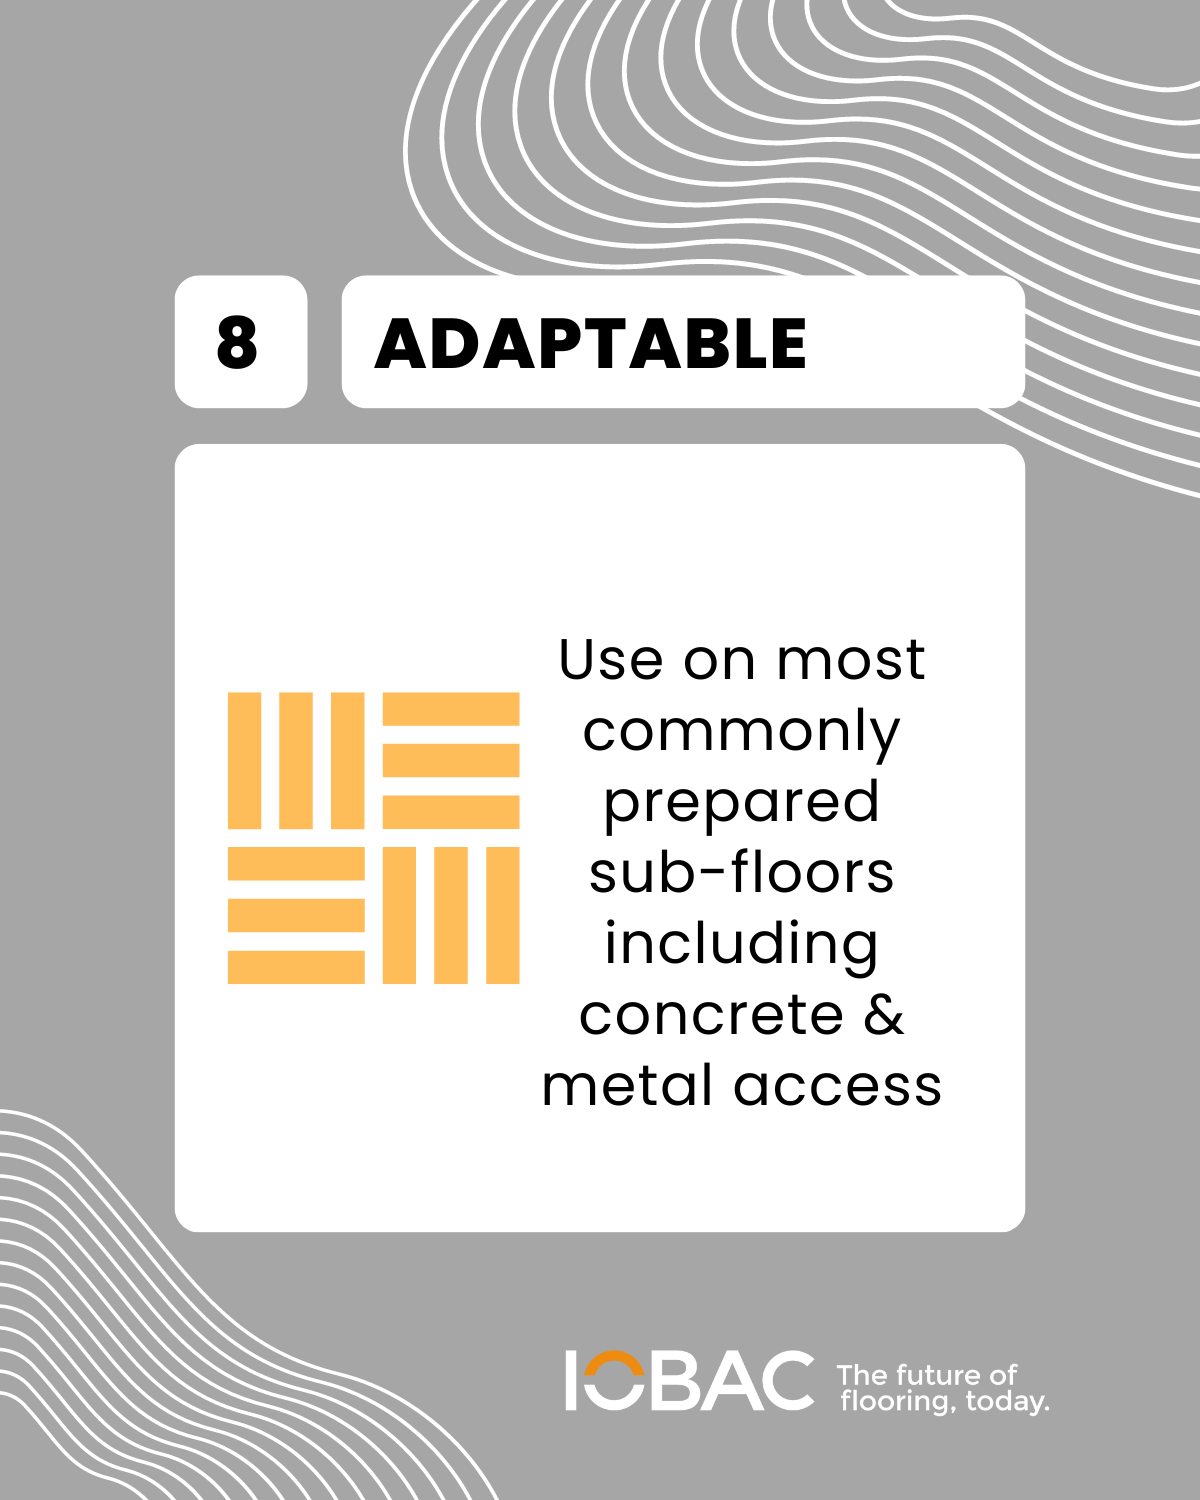 Reasons to Specify Adhesive-free Flooring - Sub-Floors